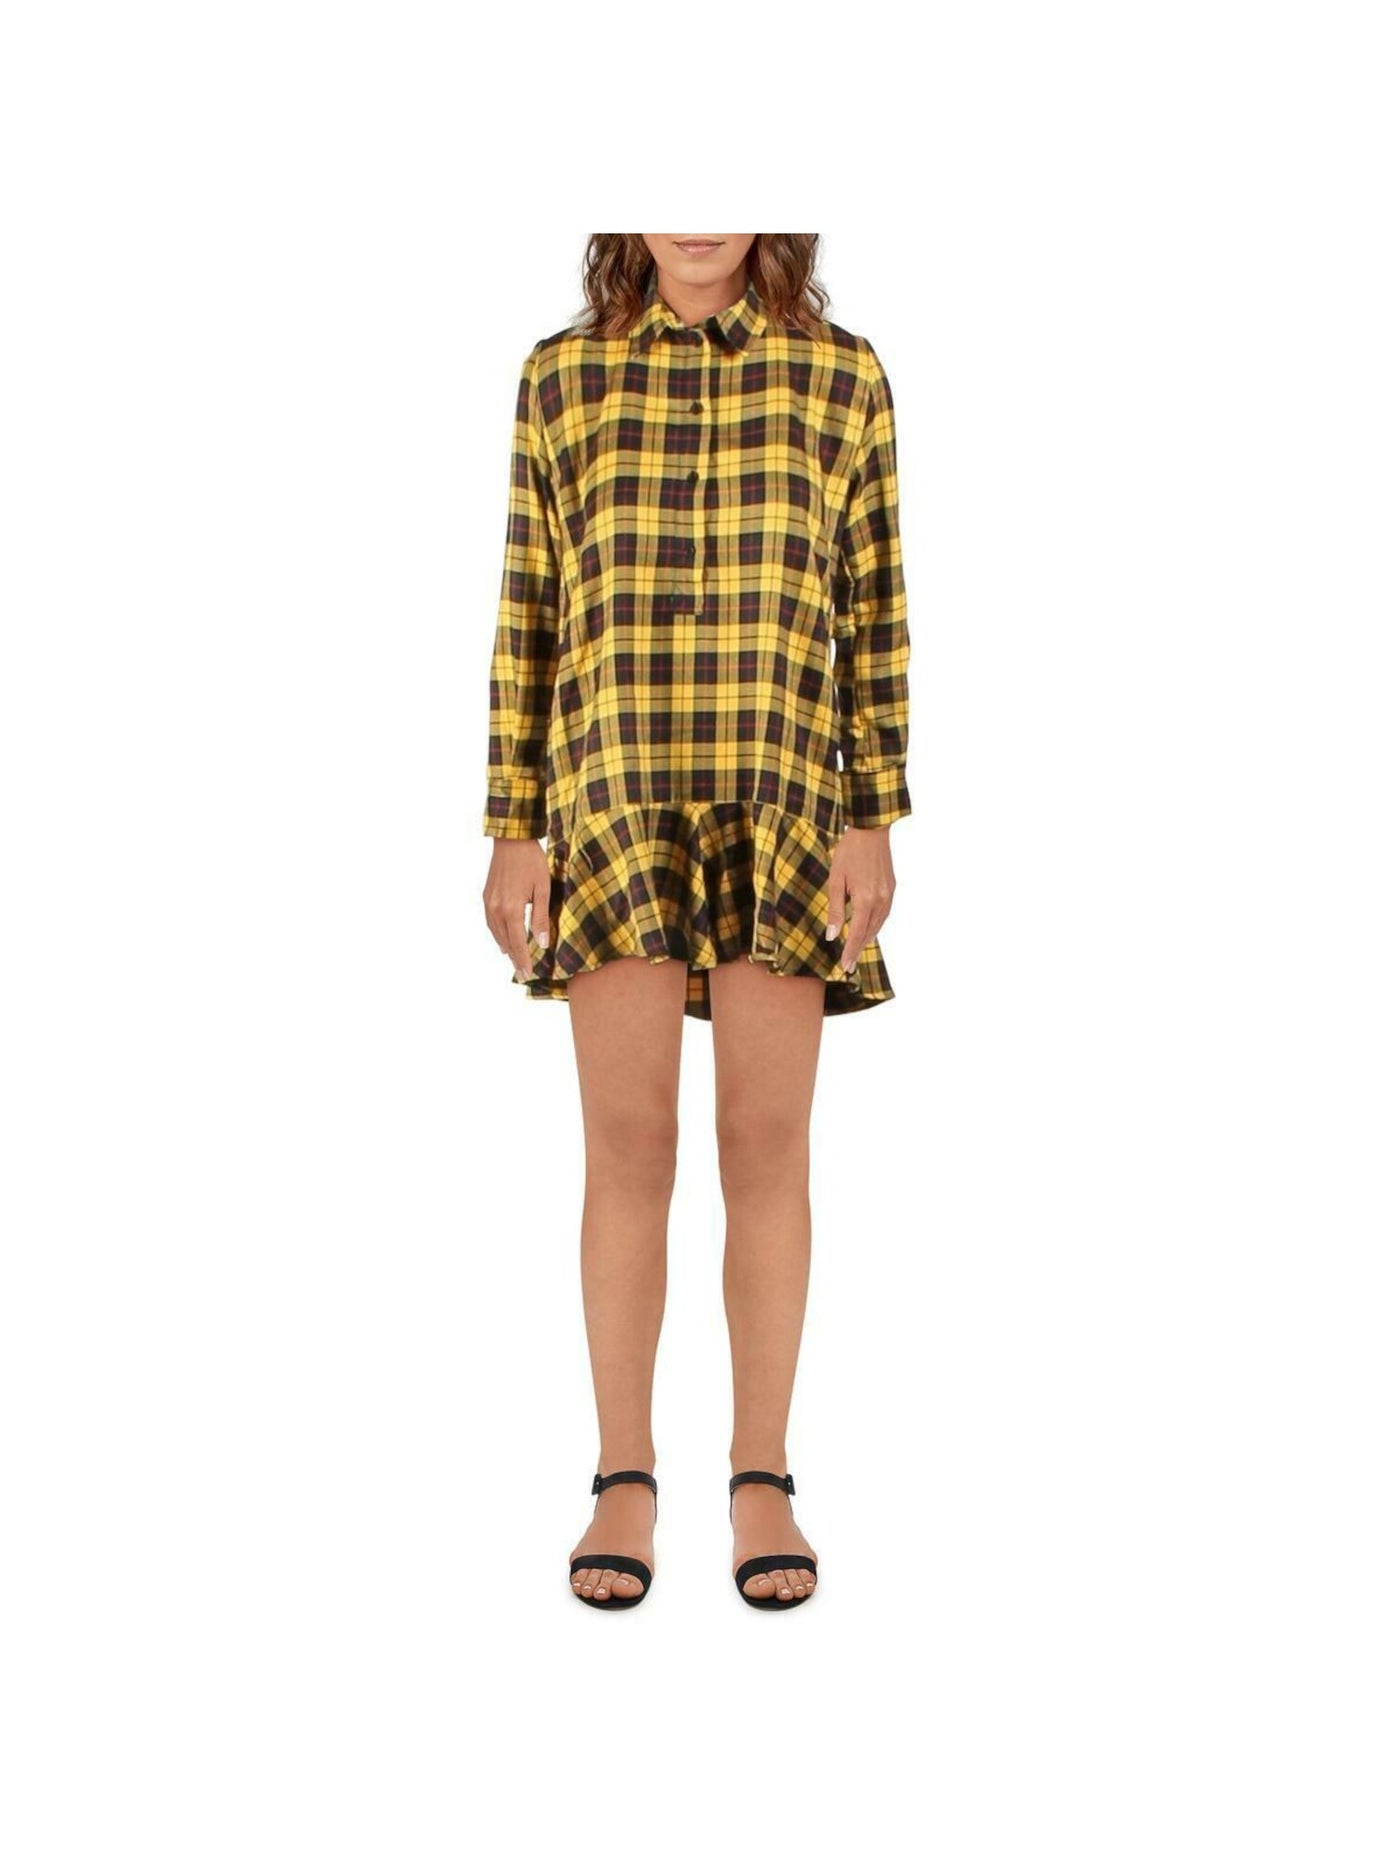 AQUA Womens Yellow Flannel Long Sleeve Collared Short Shirt Dress Size: S